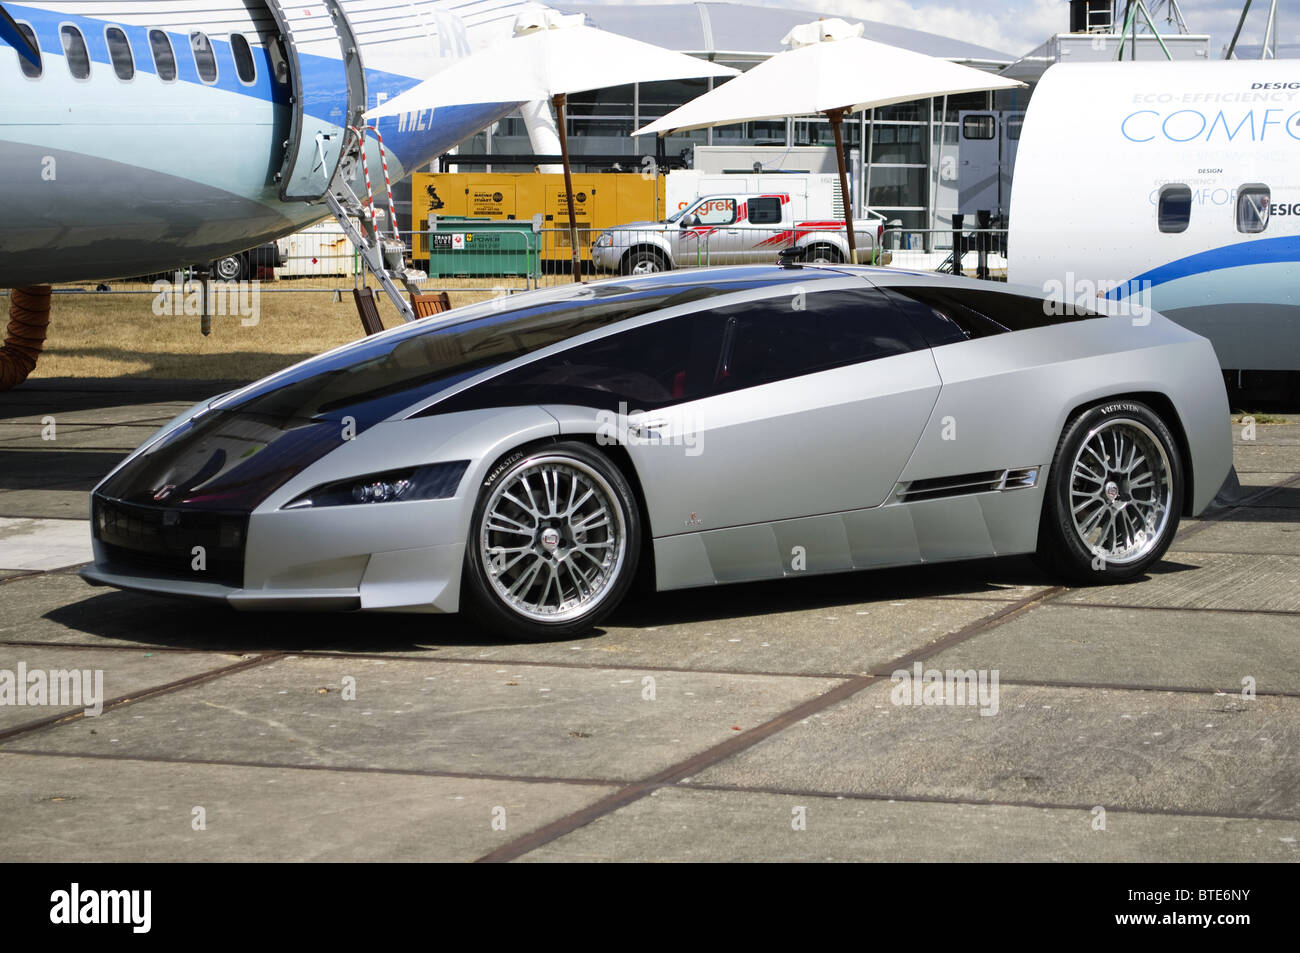 Italdesign Qaranta hybrid-powered concept car, designed by Fabrizio Giugiaro, on display at Farnborough Airshow 2010 Stock Photo